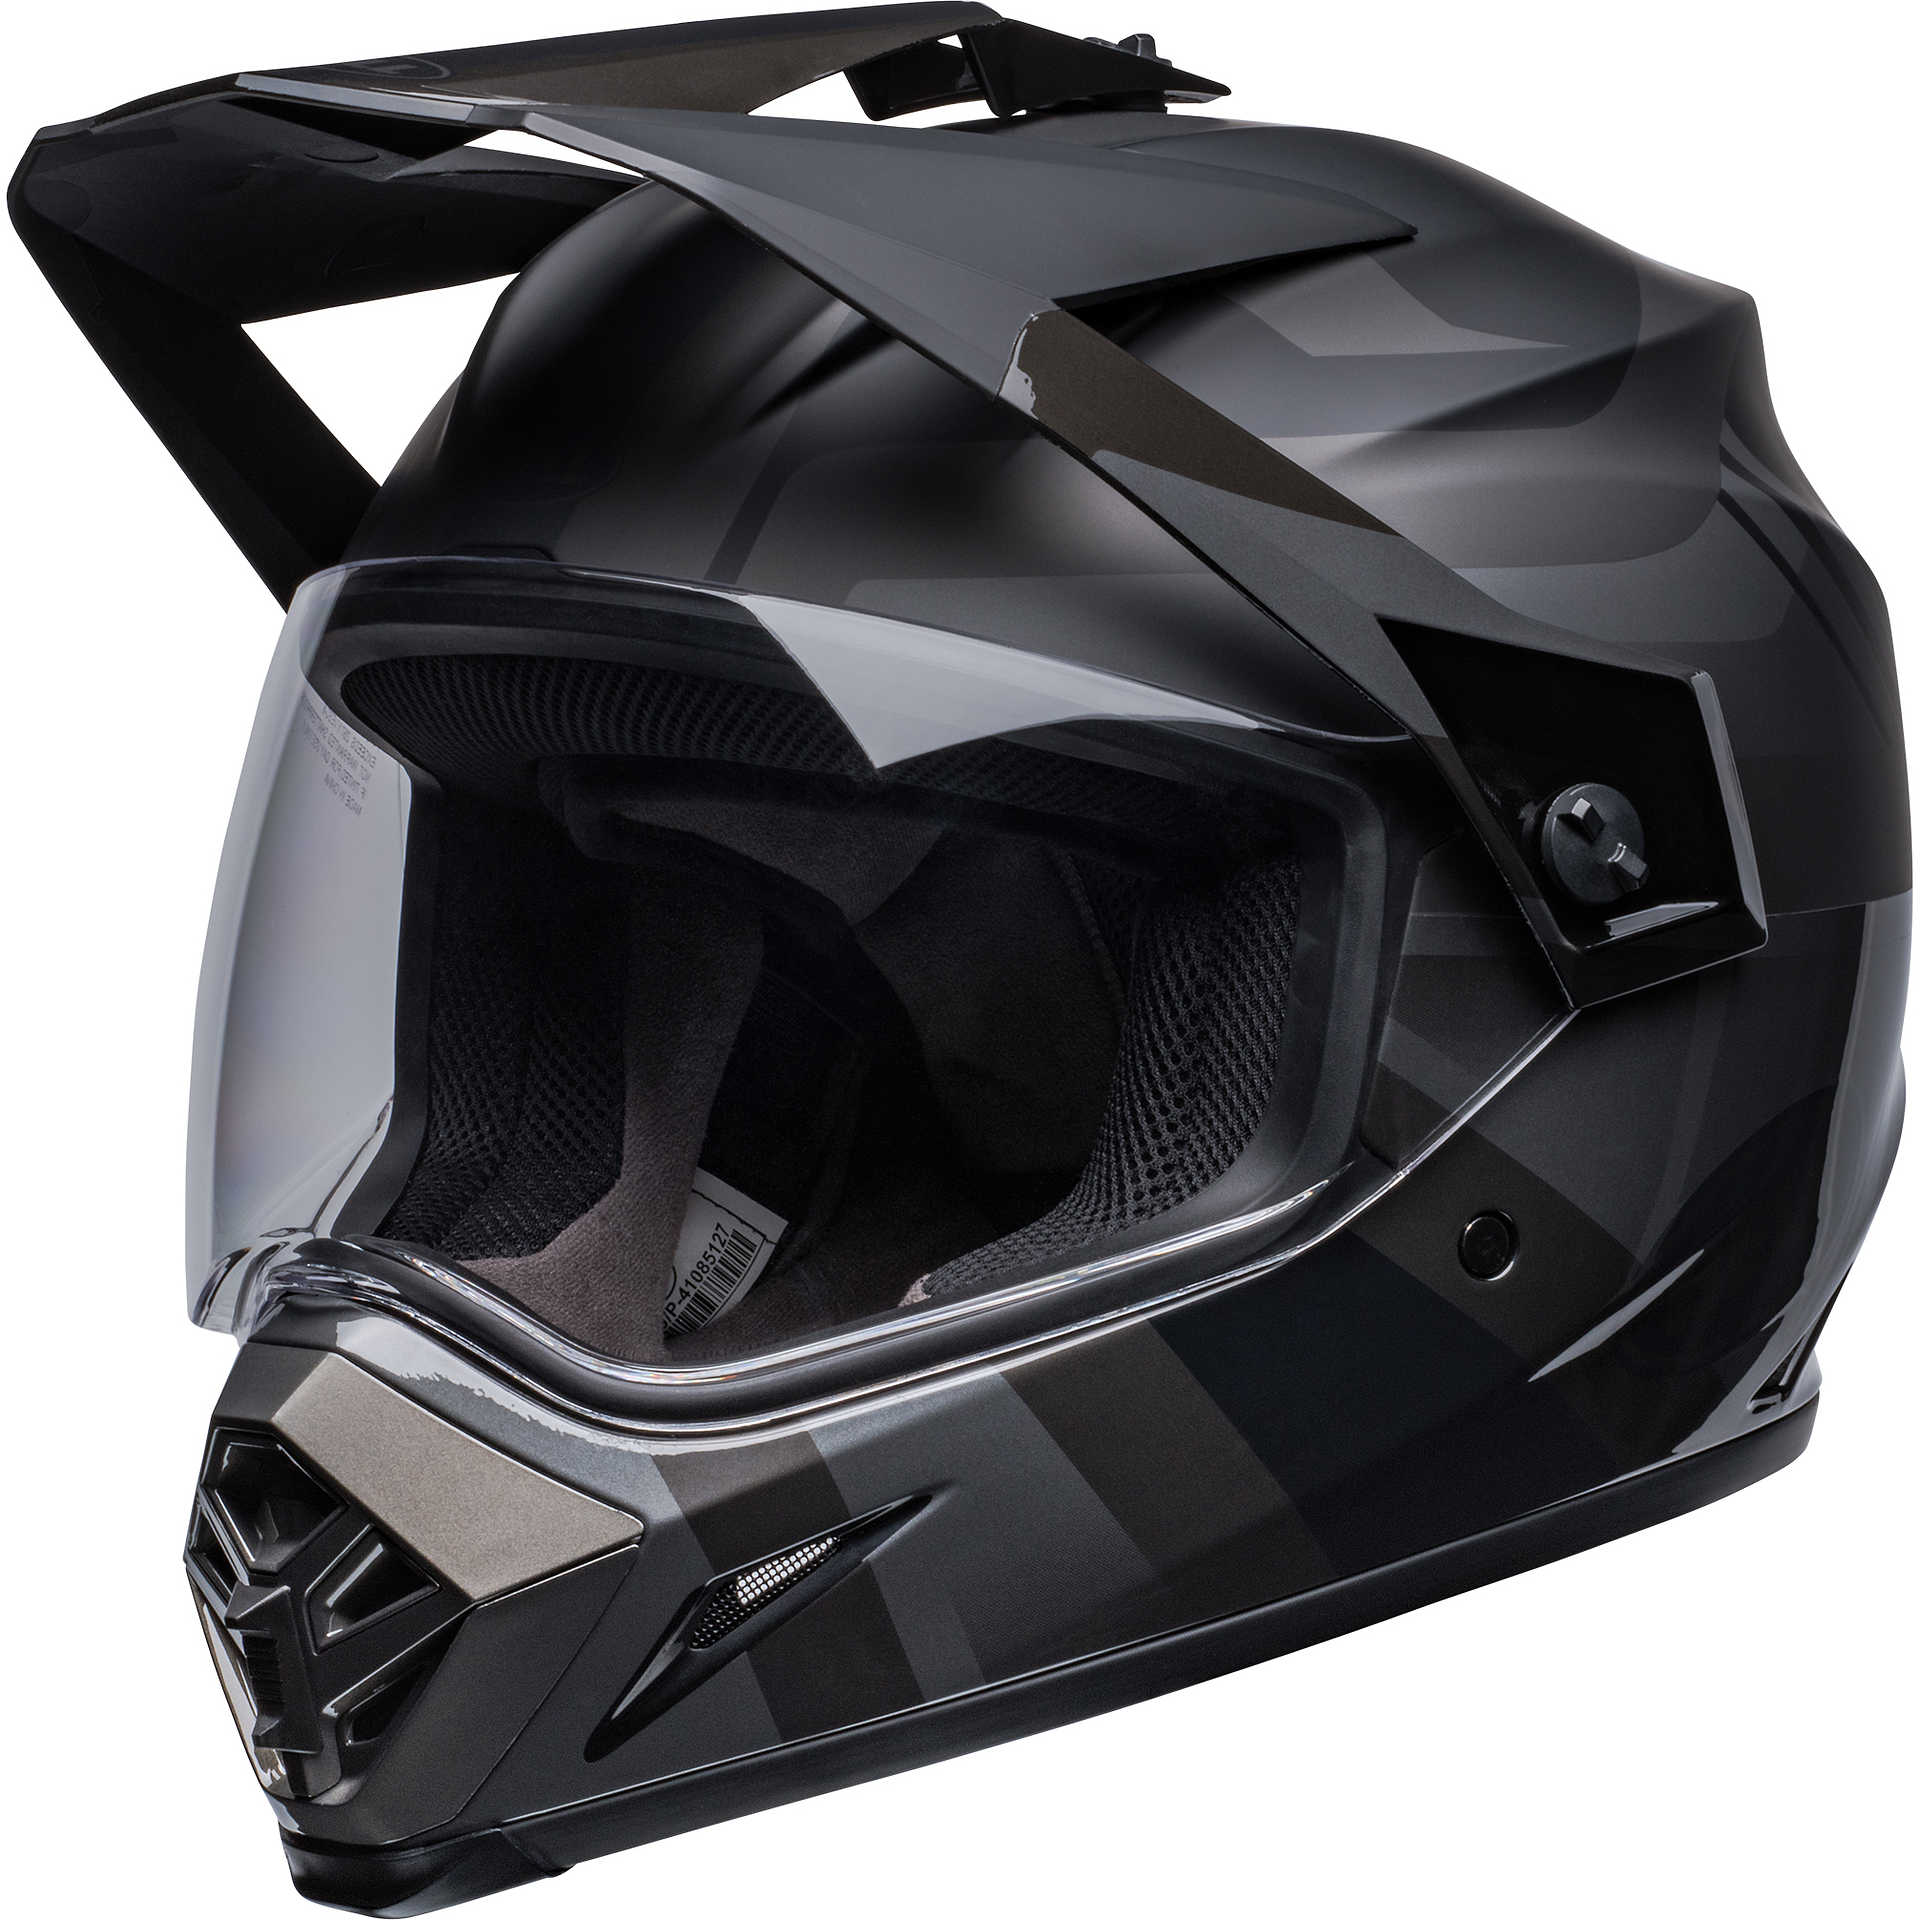 VCAN Support de casque de moto, sac à dos noir, sac à dos de